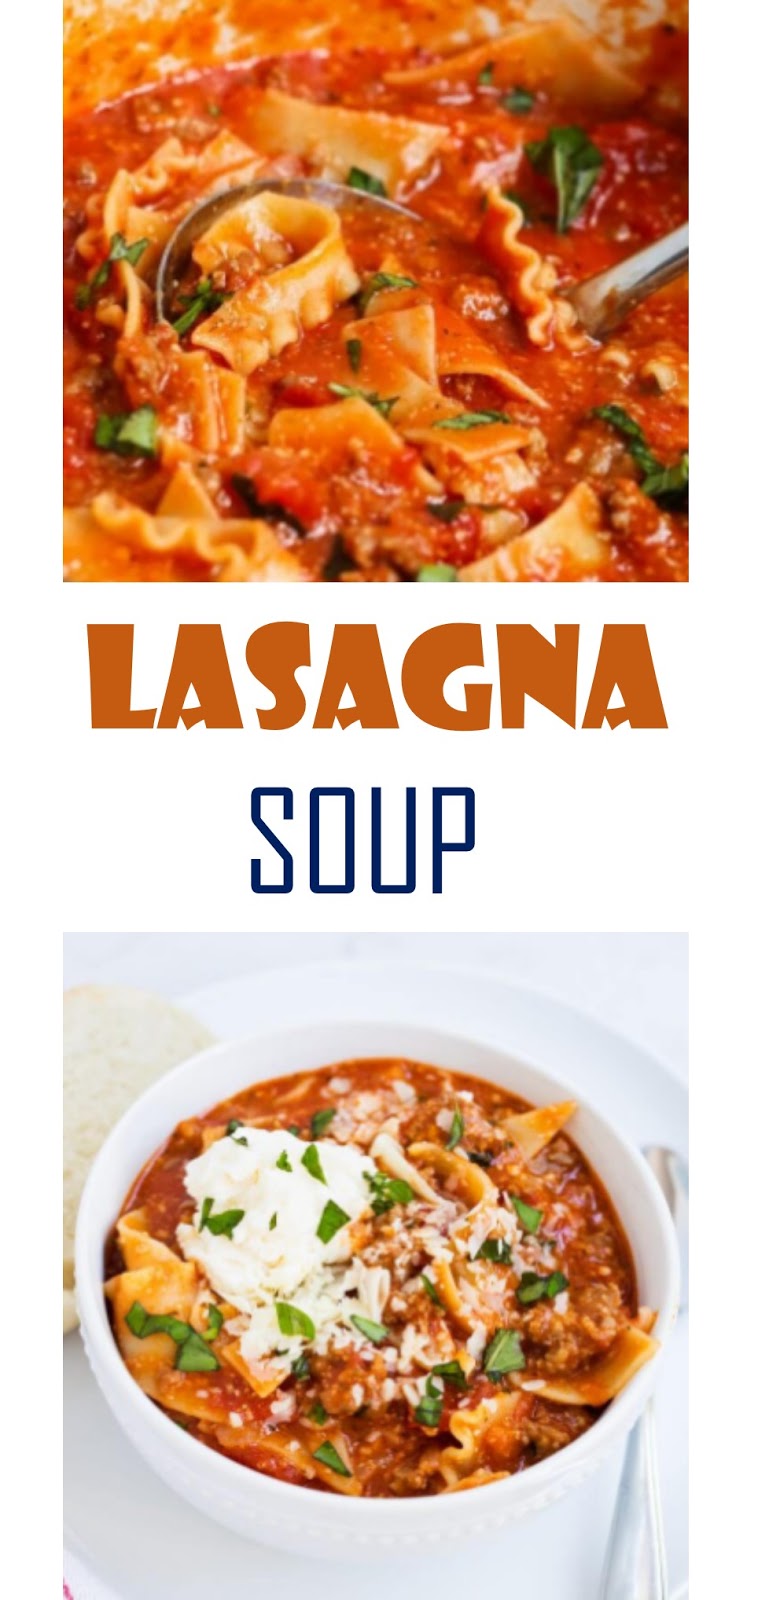 673 Reviews: THE BEST EVER #Recipes >> LASAGNA SOUP - .....